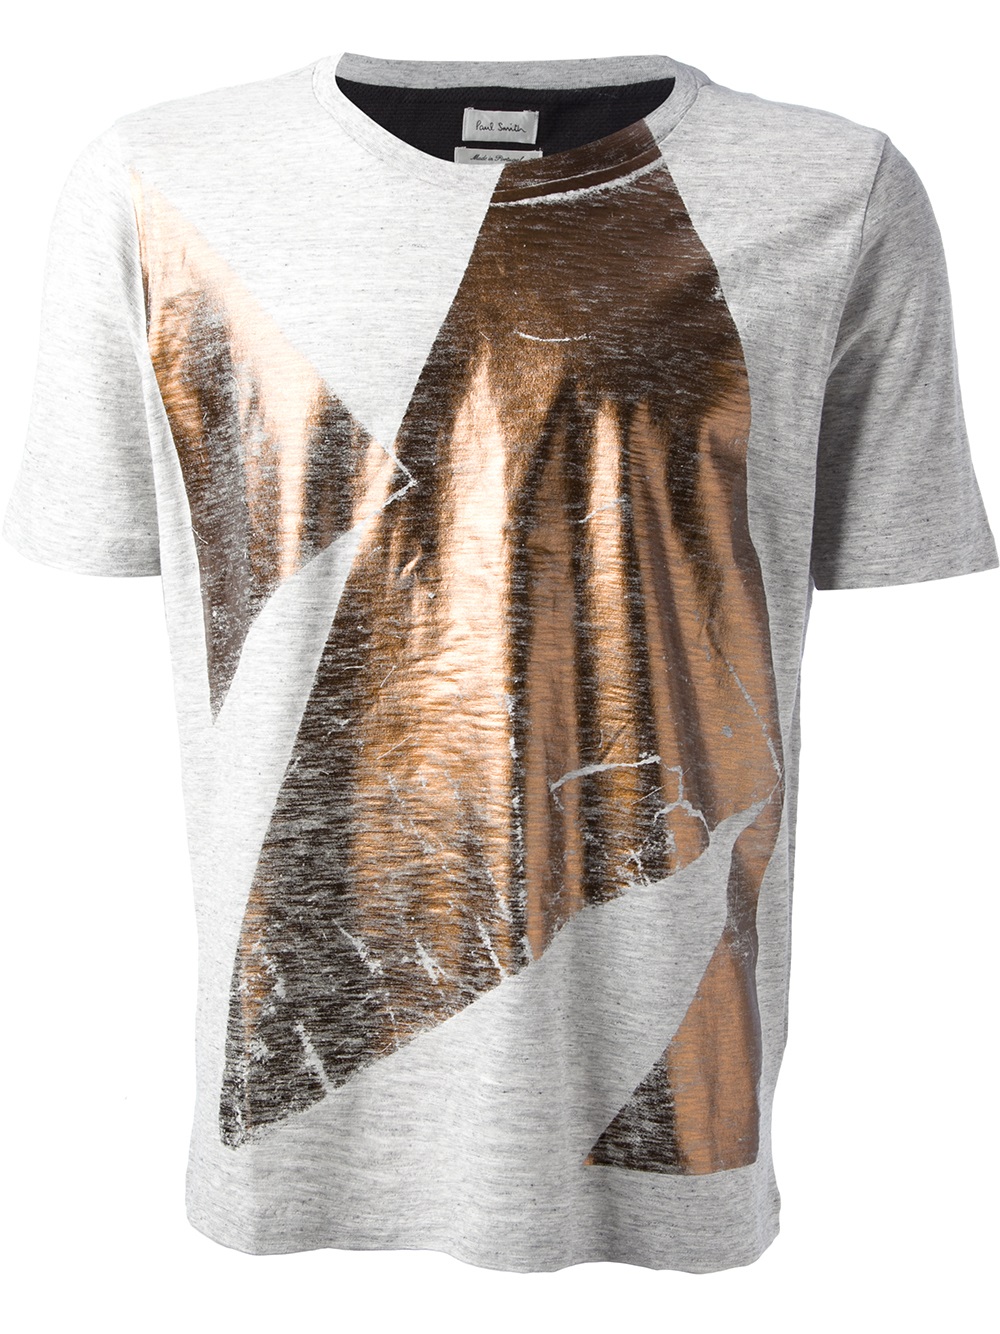 Paul Smith Metallic Panel T-shirt in Grey (Gray) for Men - Lyst